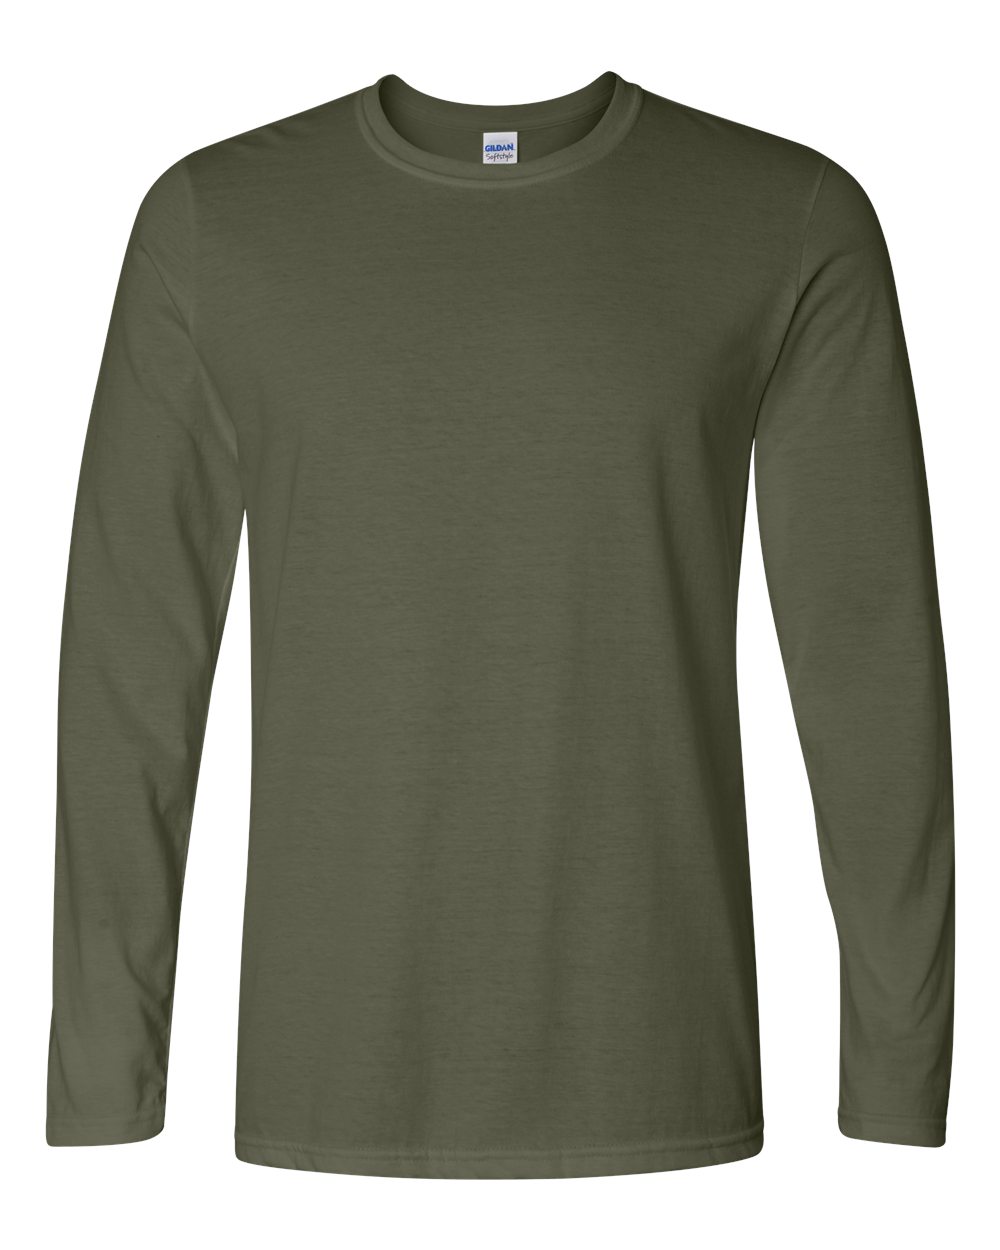 Gildan Mens Blank Cotton Softstyle Long Sleeve T Shirt 64400 up to 3XL ...